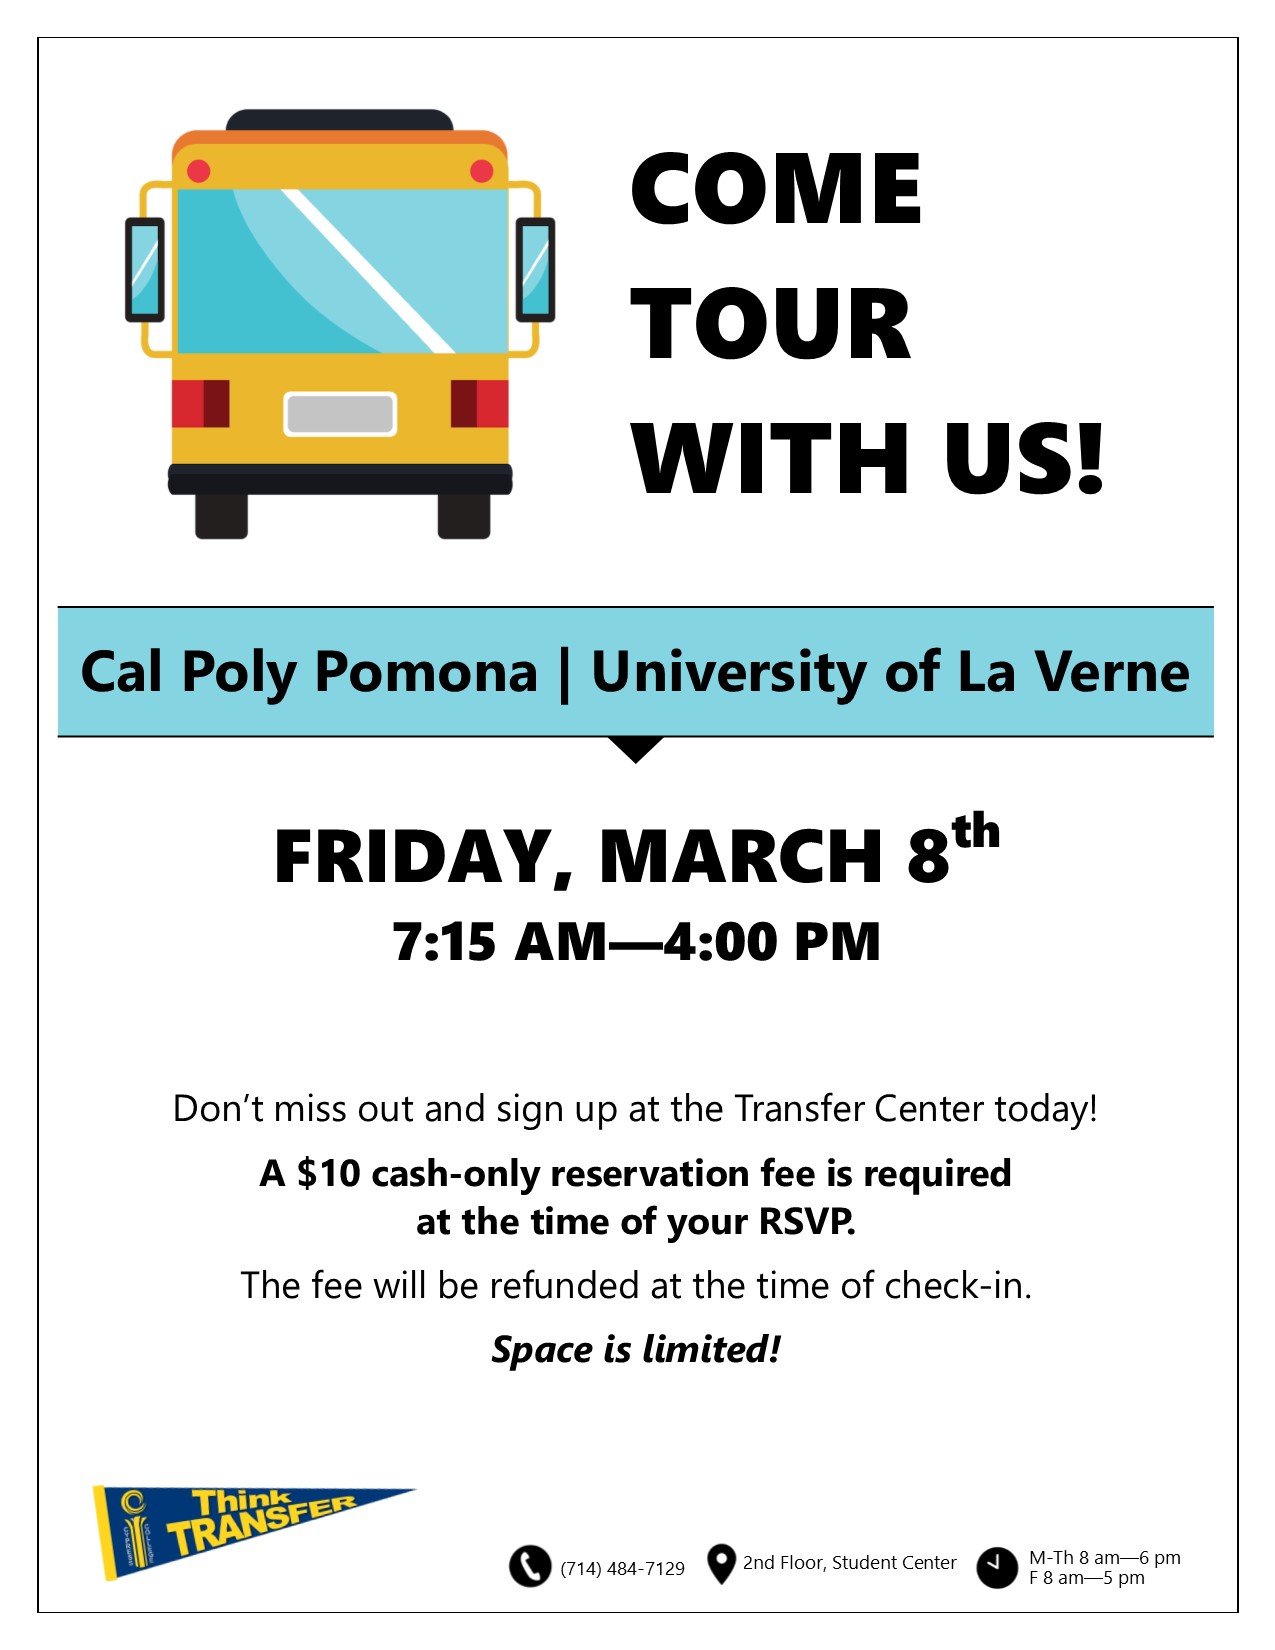 Cal Poly Pomona/University of La Verne Bus Tour flyer